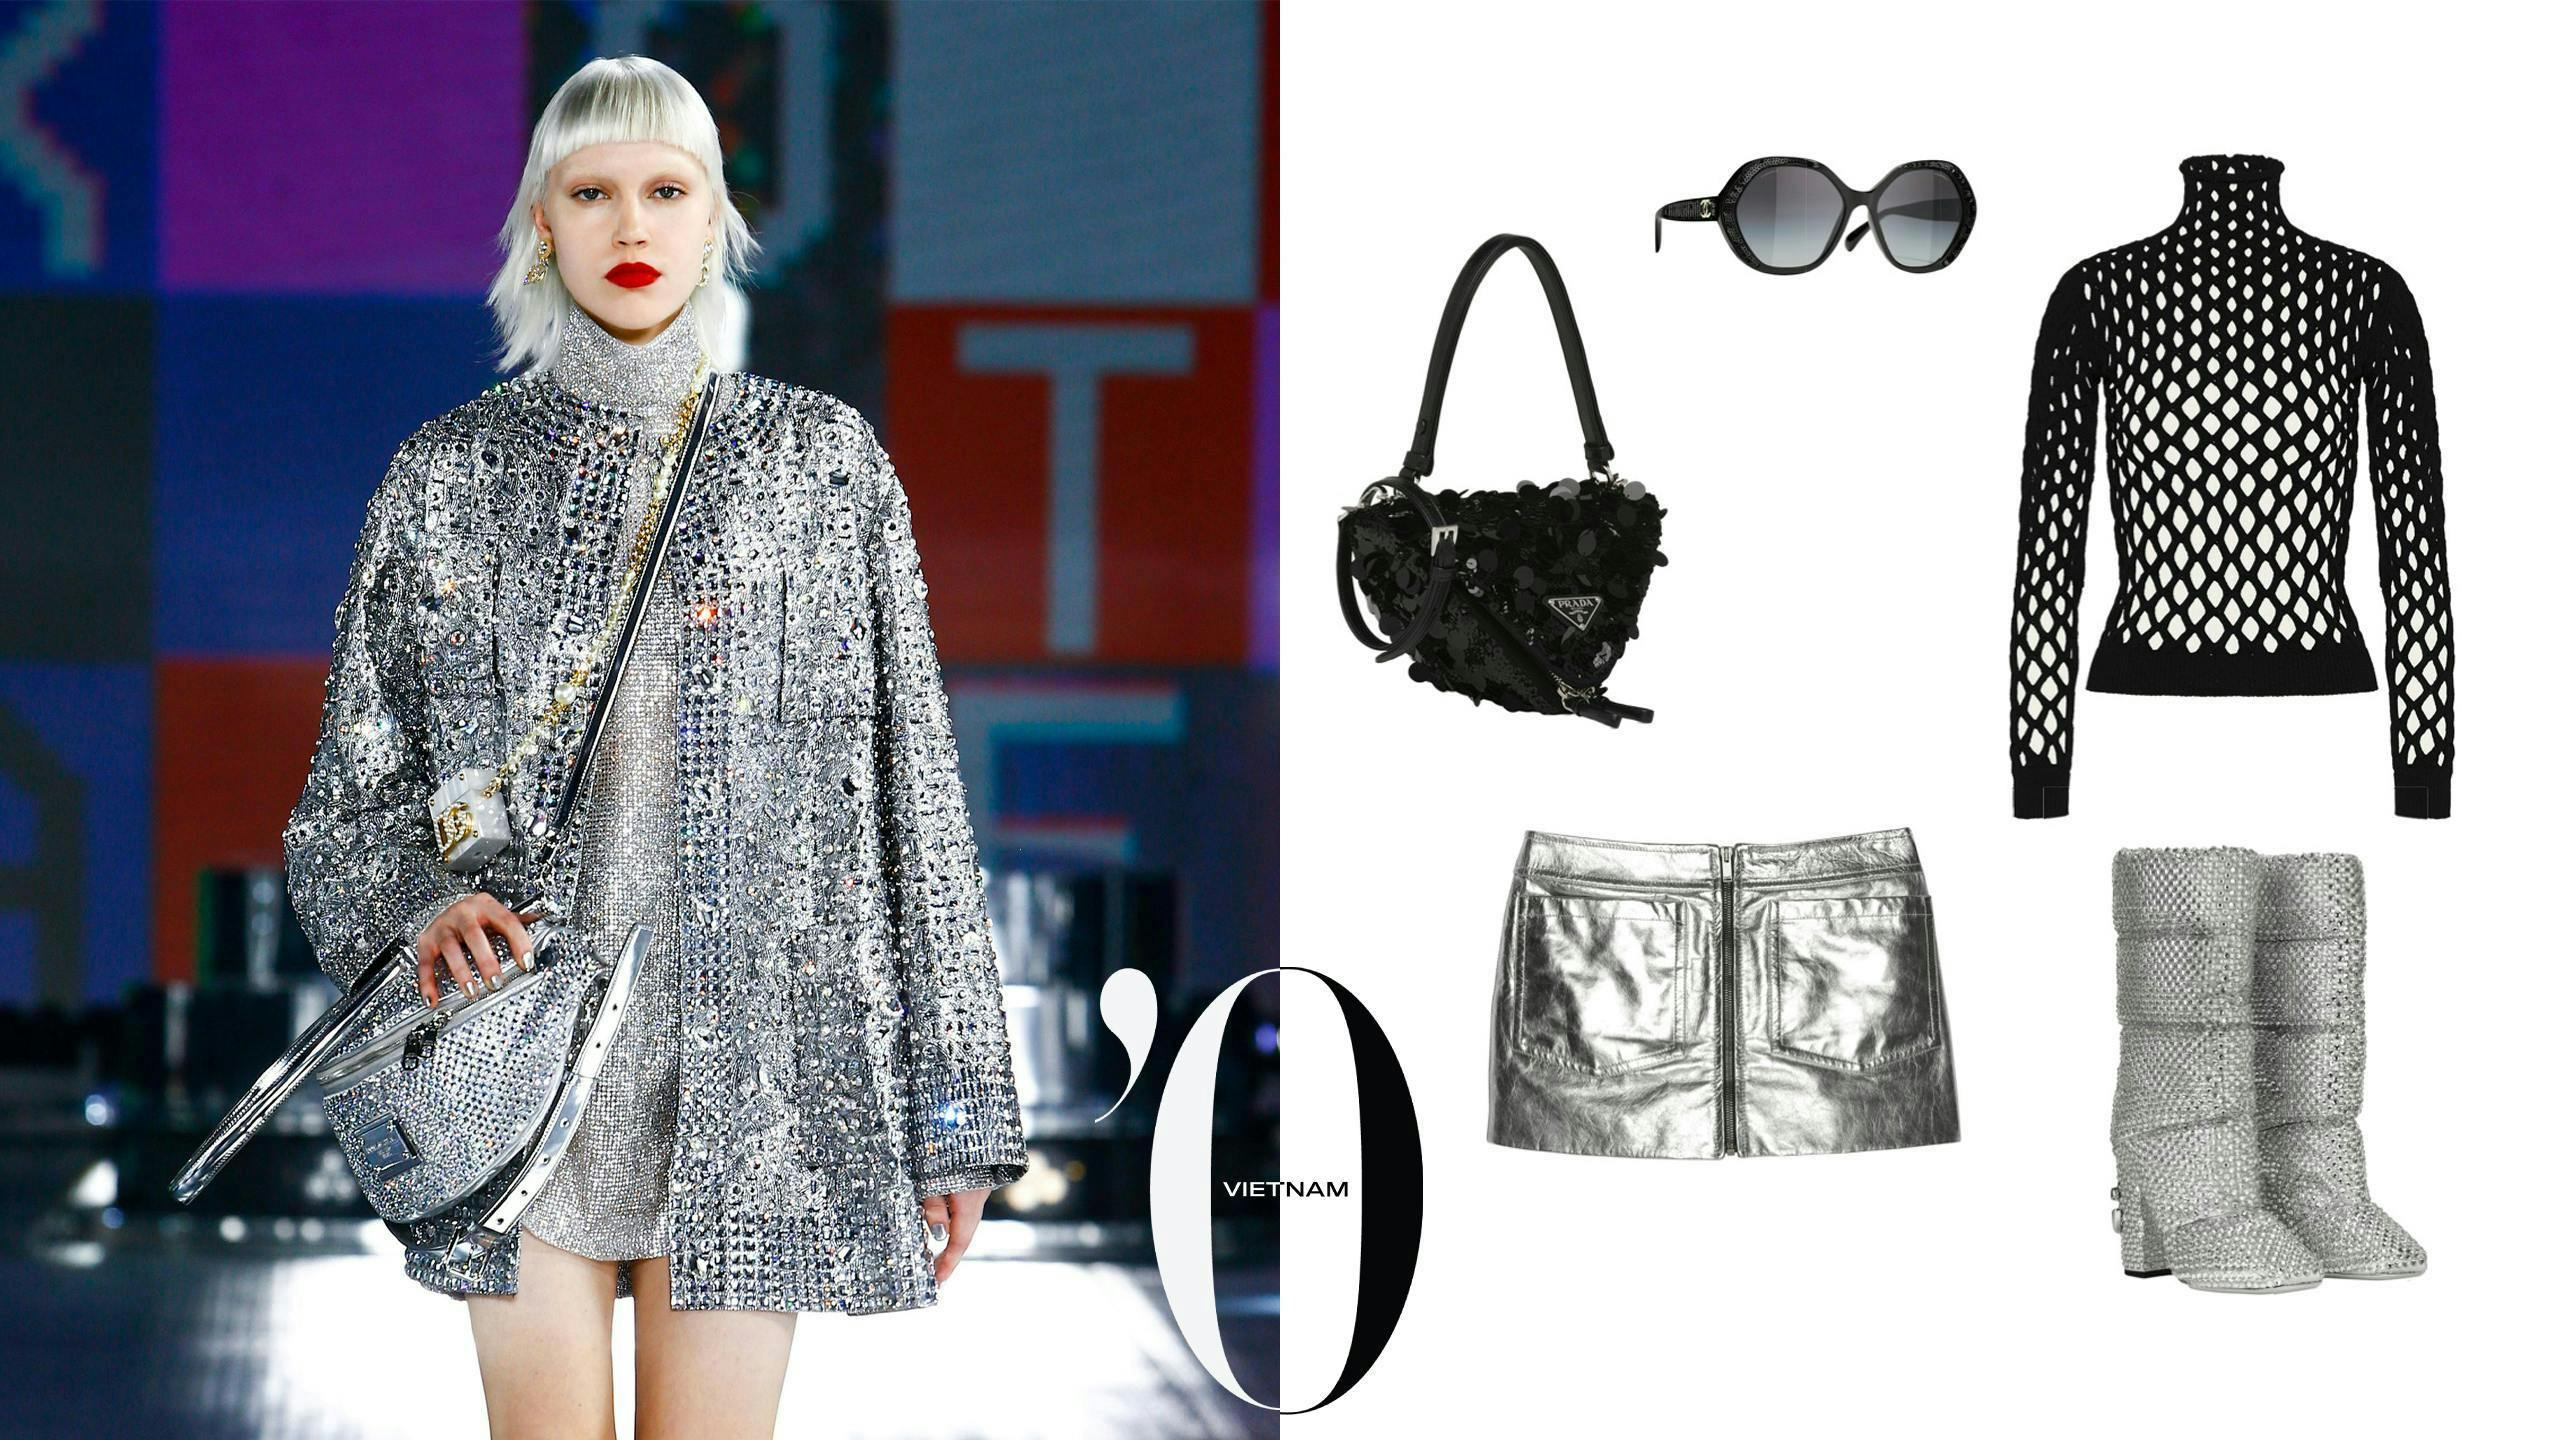 clothing apparel person human handbag accessories bag accessory fashion sunglasses